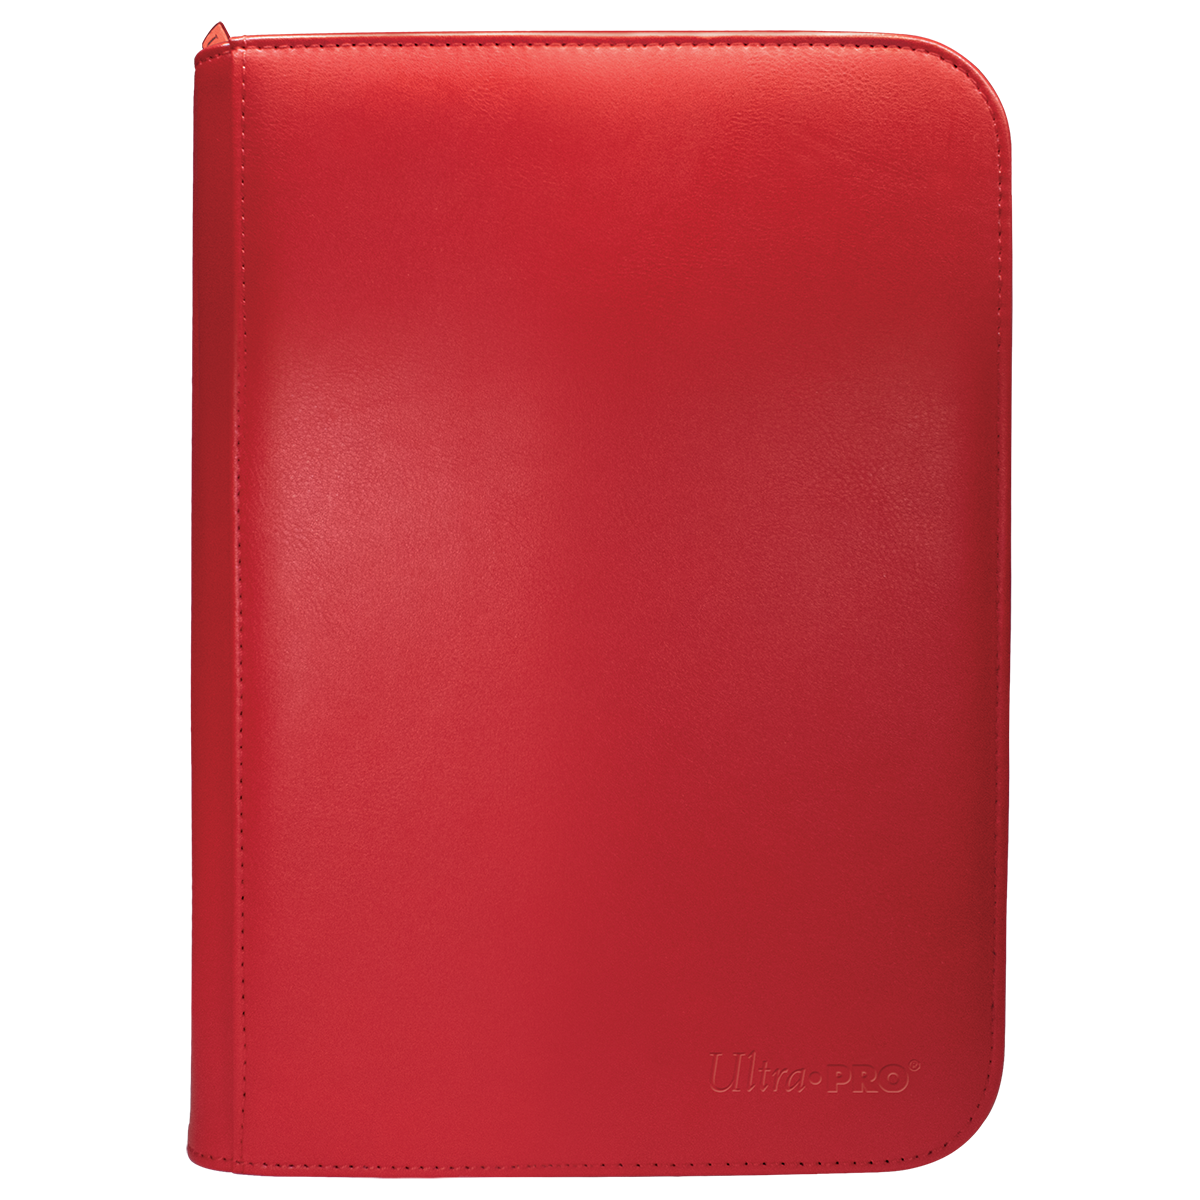 4-Pocket Ultra Pro Vivid Zippered Binder - Red